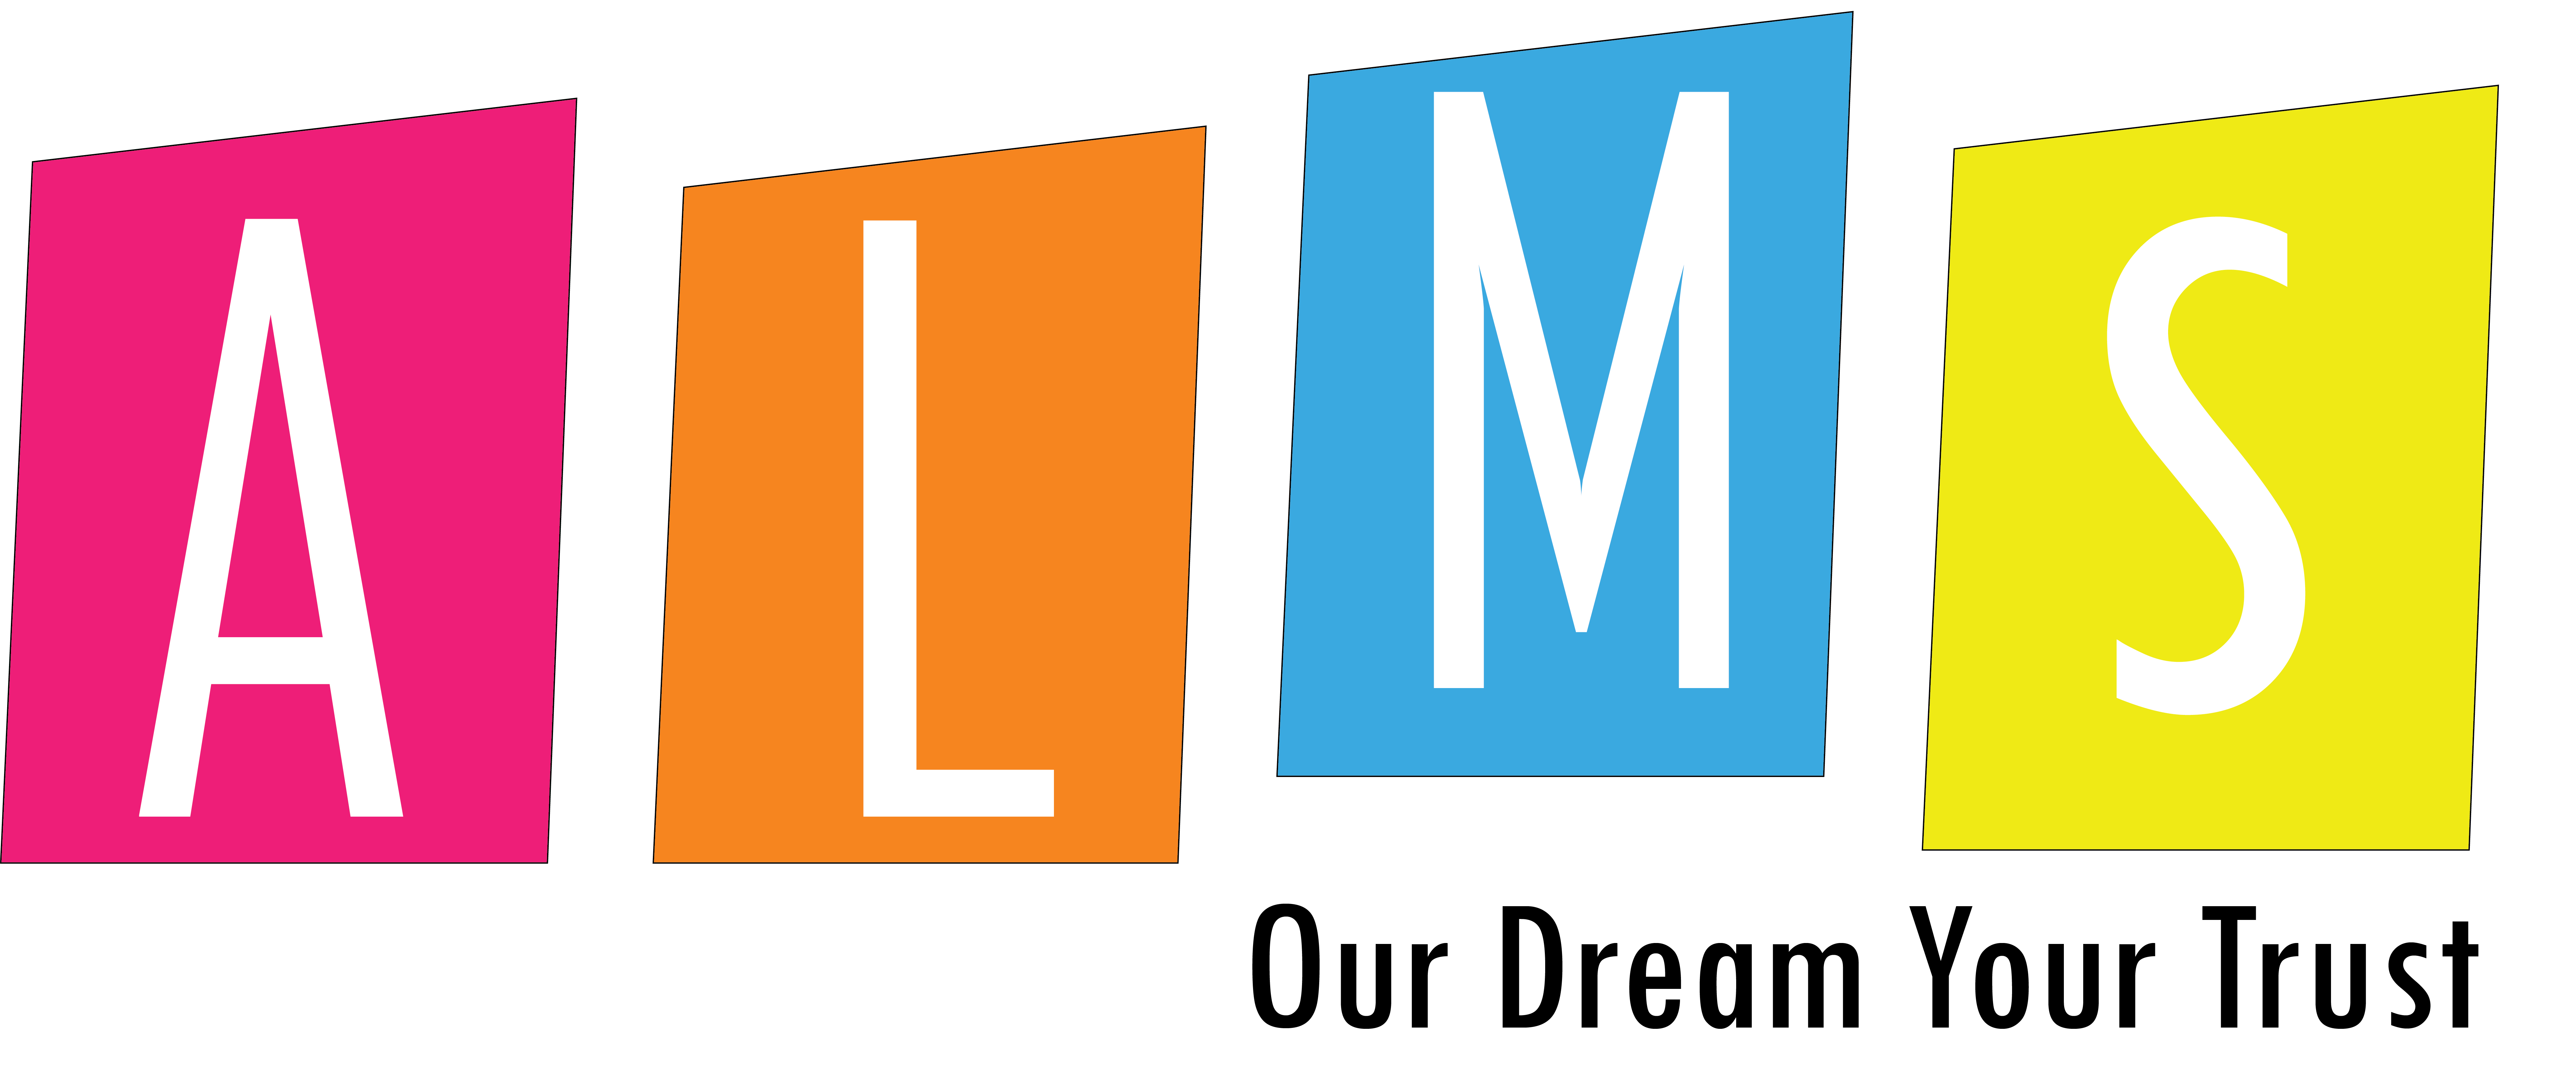 ALMS Logo